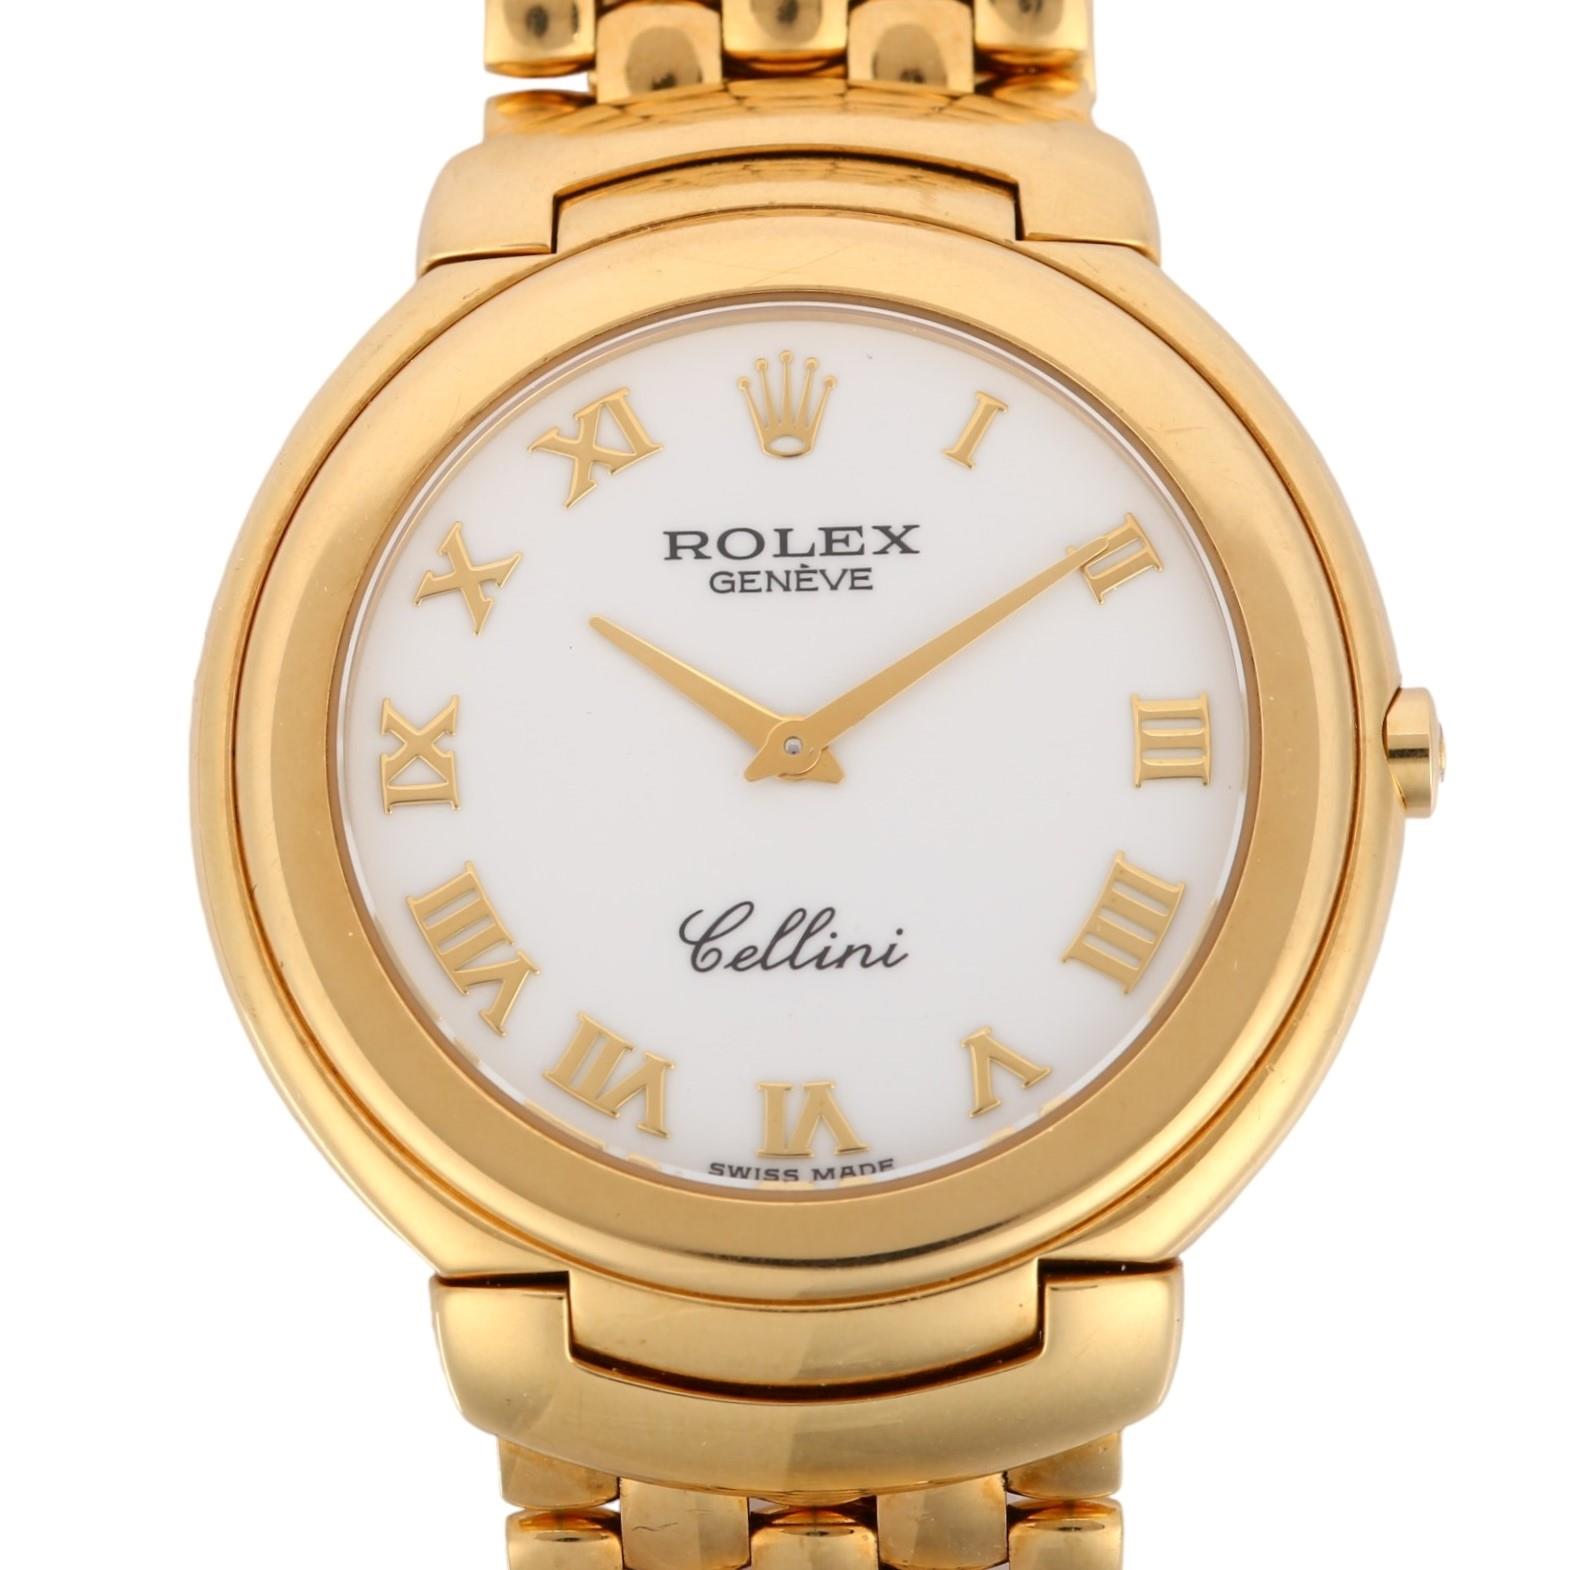 ROLEX - an 18ct gold Cellini quartz bracelet watch, ref. 6623, circa 1990, white dial with applied